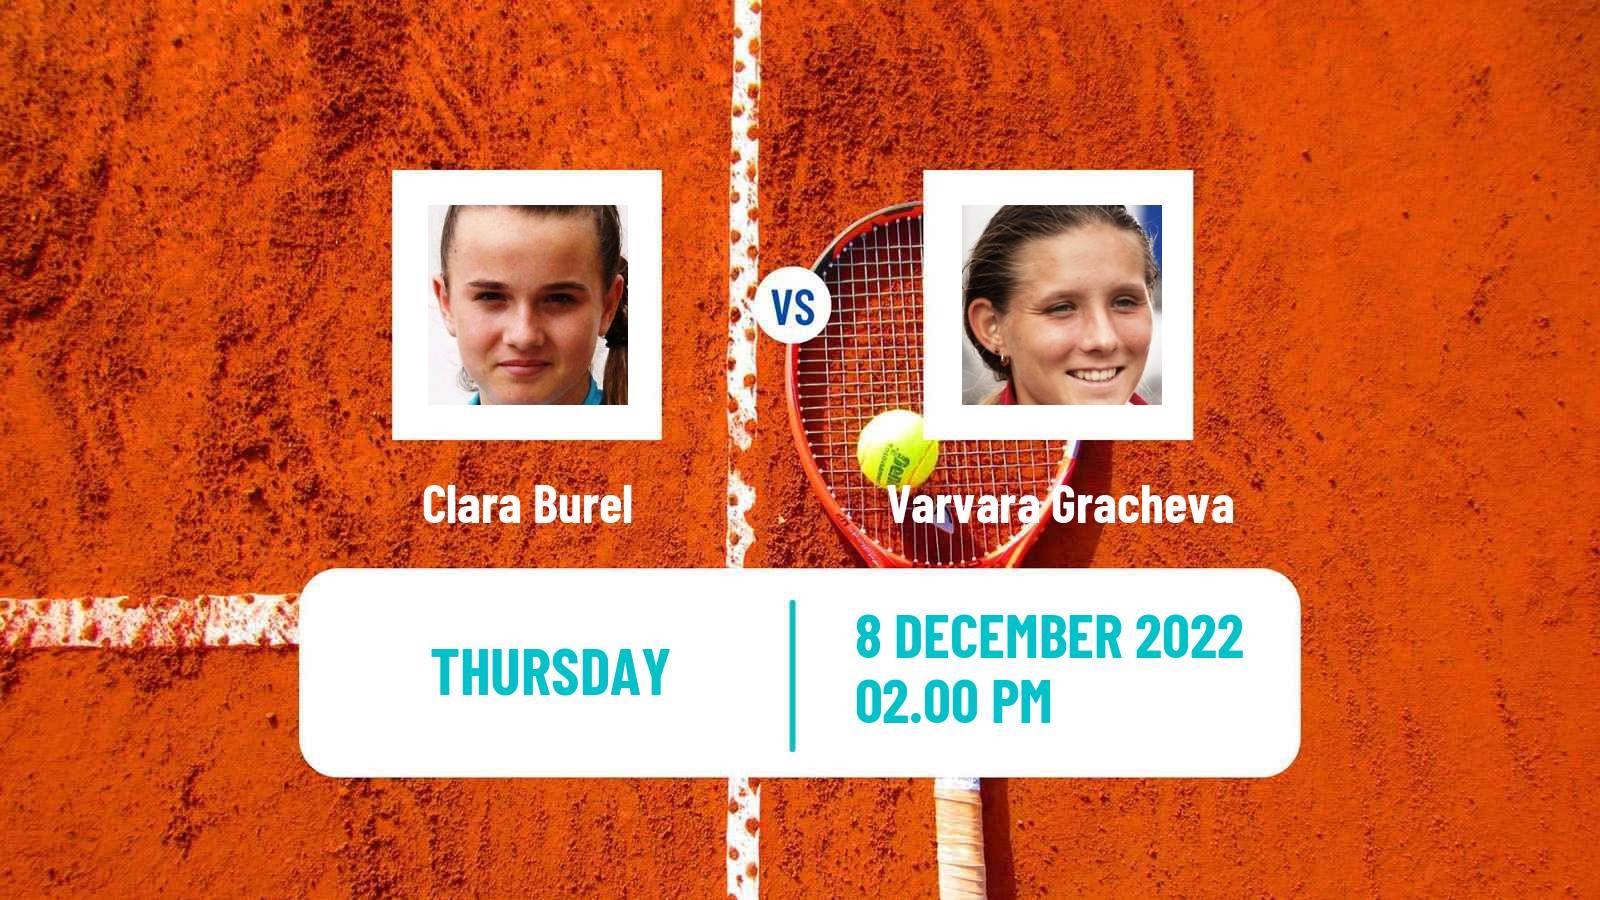 Tennis ATP Challenger Clara Burel - Varvara Gracheva